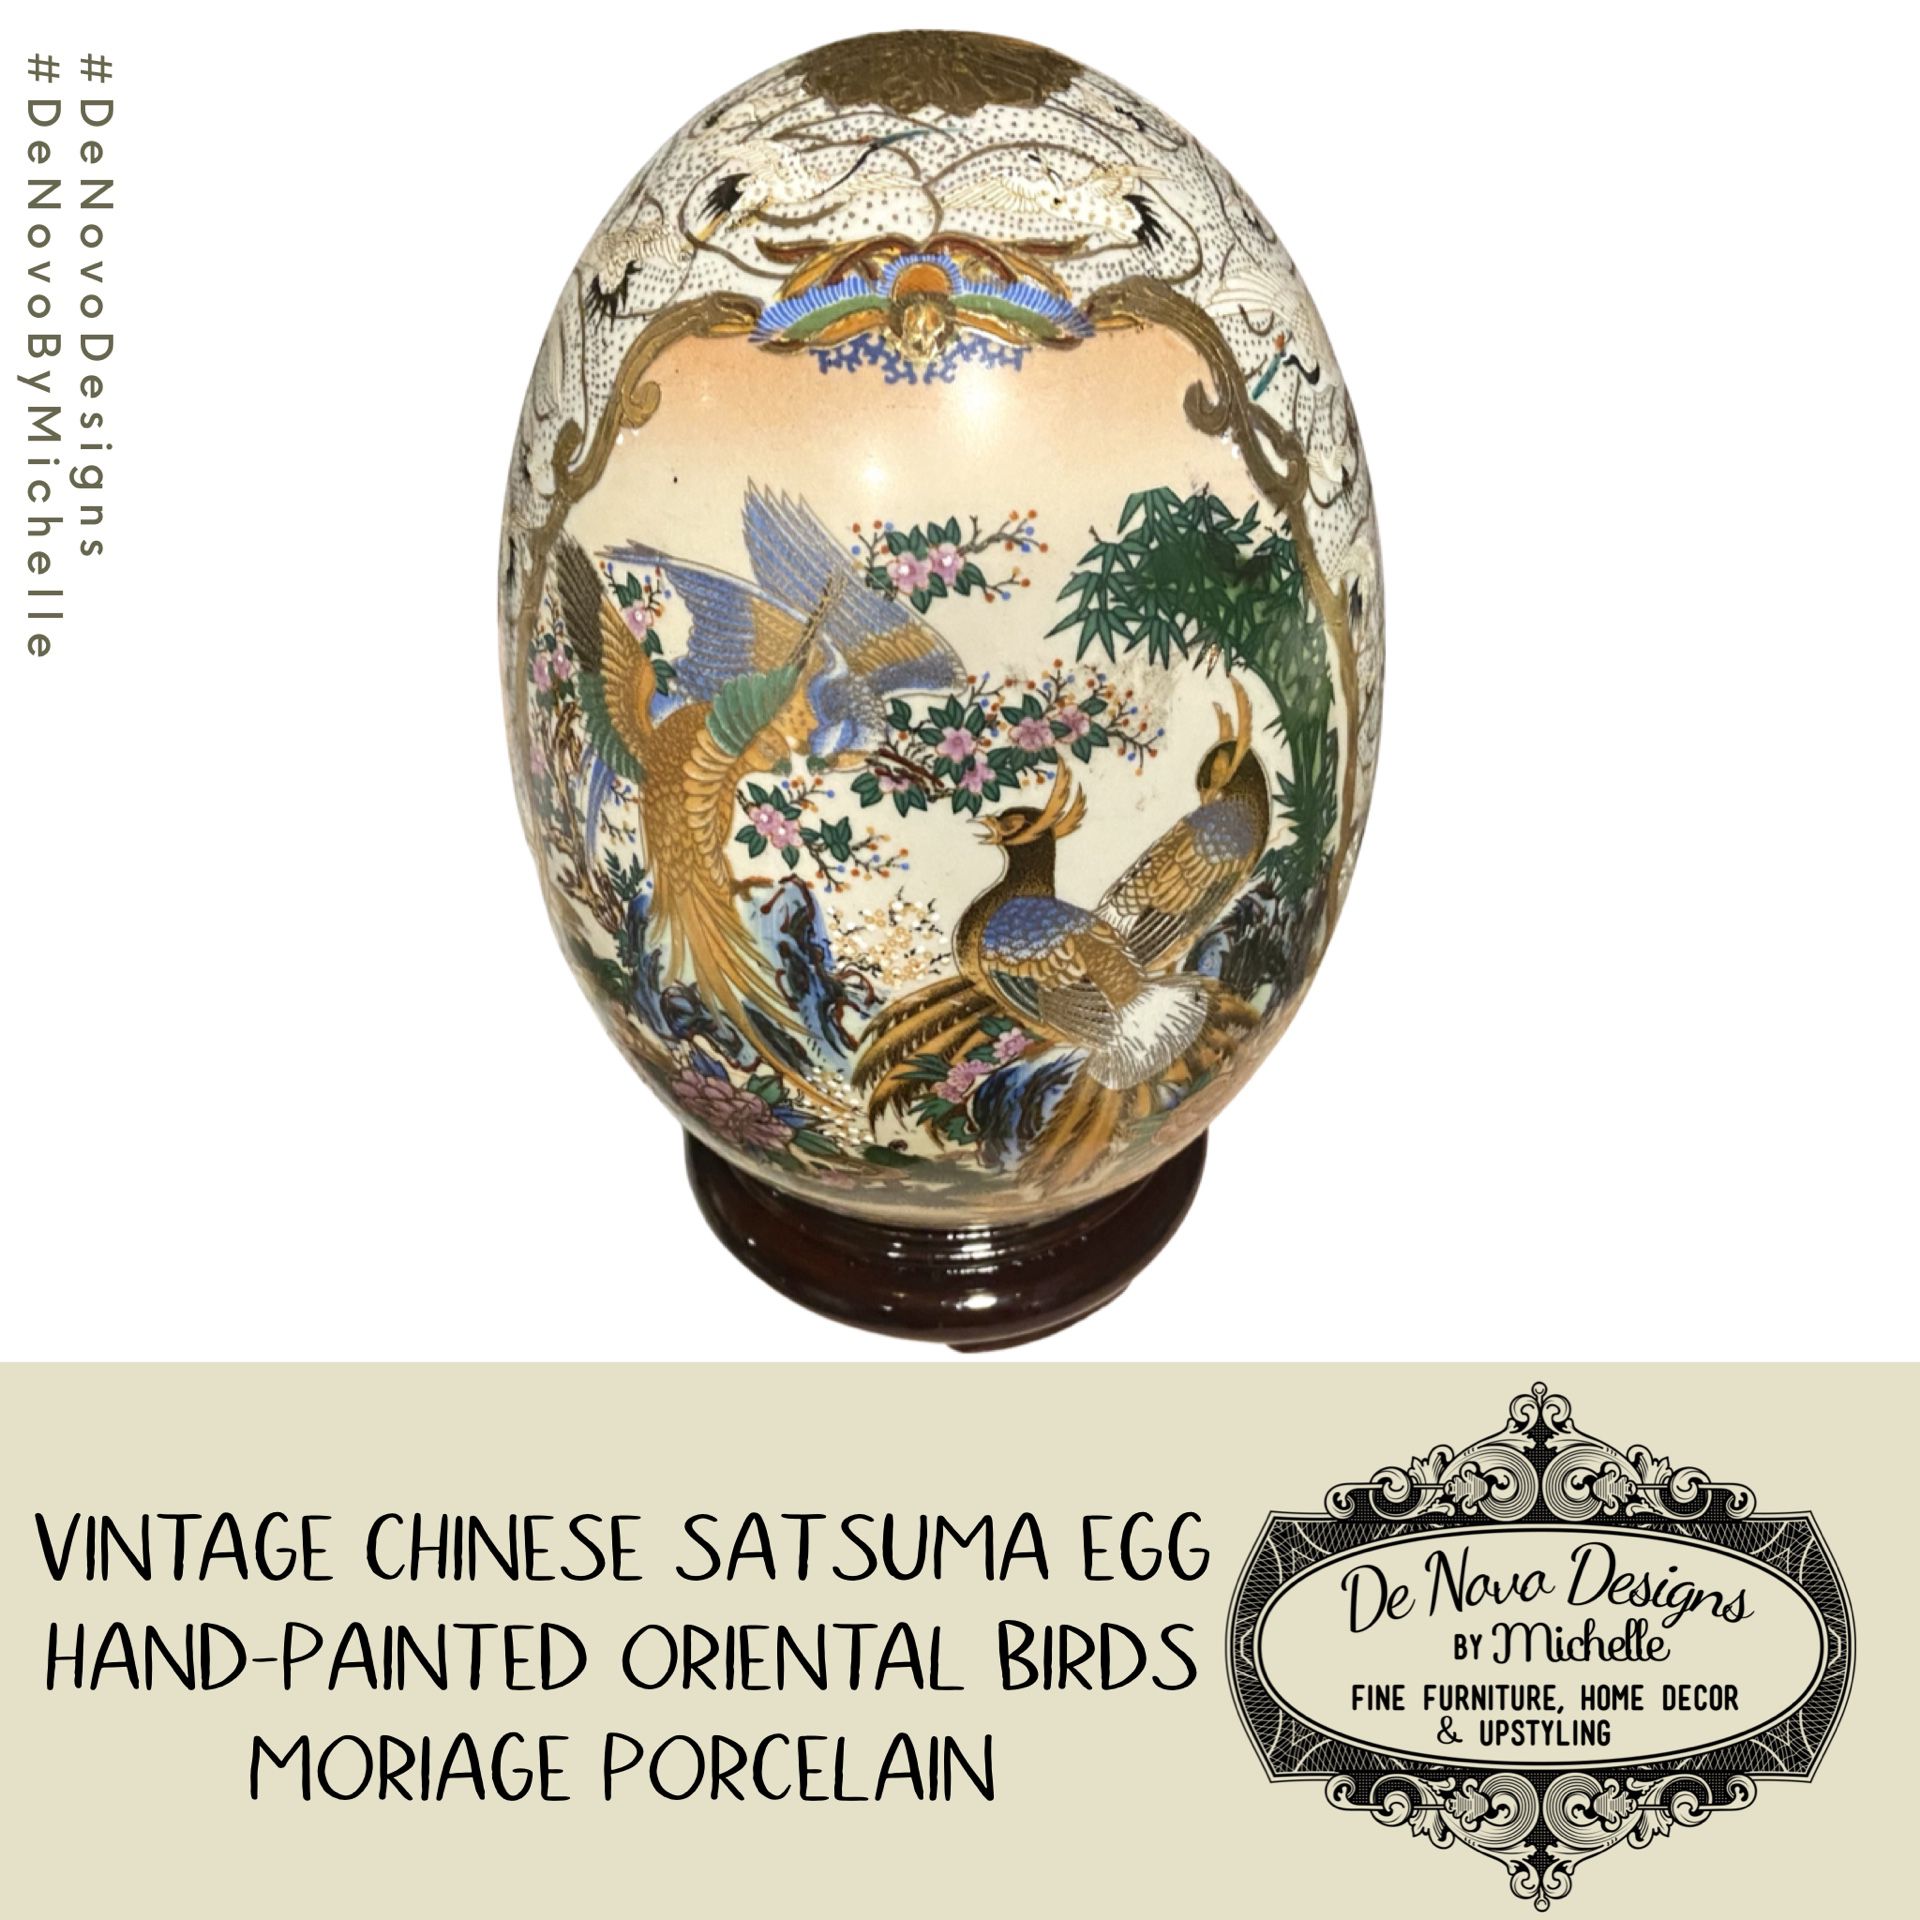 Vintage Chinese Satsuma Egg Hand-Painted Oriental Birds Moriage Porcelain